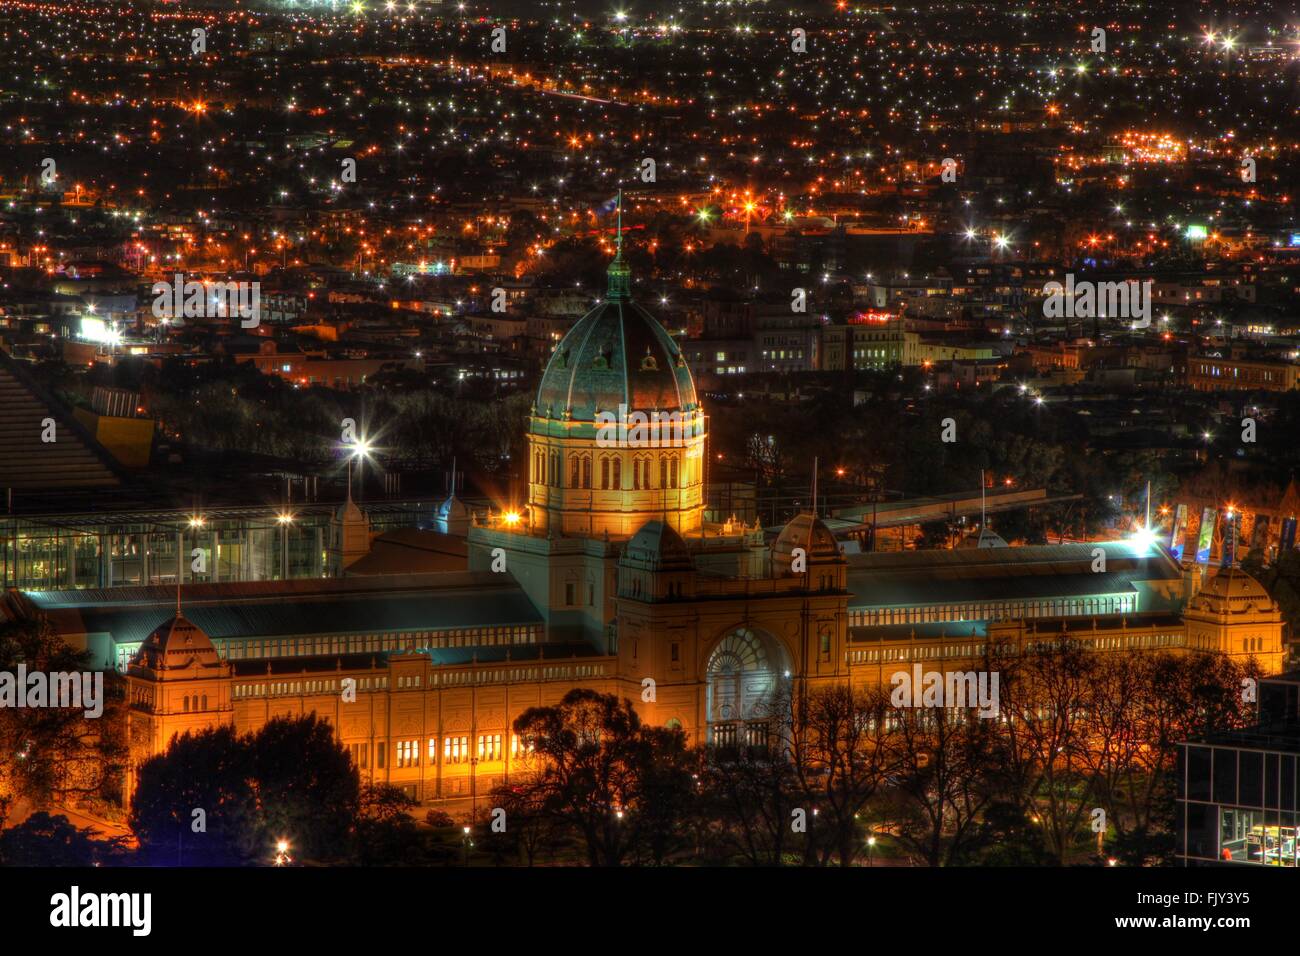 Illuminated Royal Exhibition Building And Cityscape At Night Stock Photo